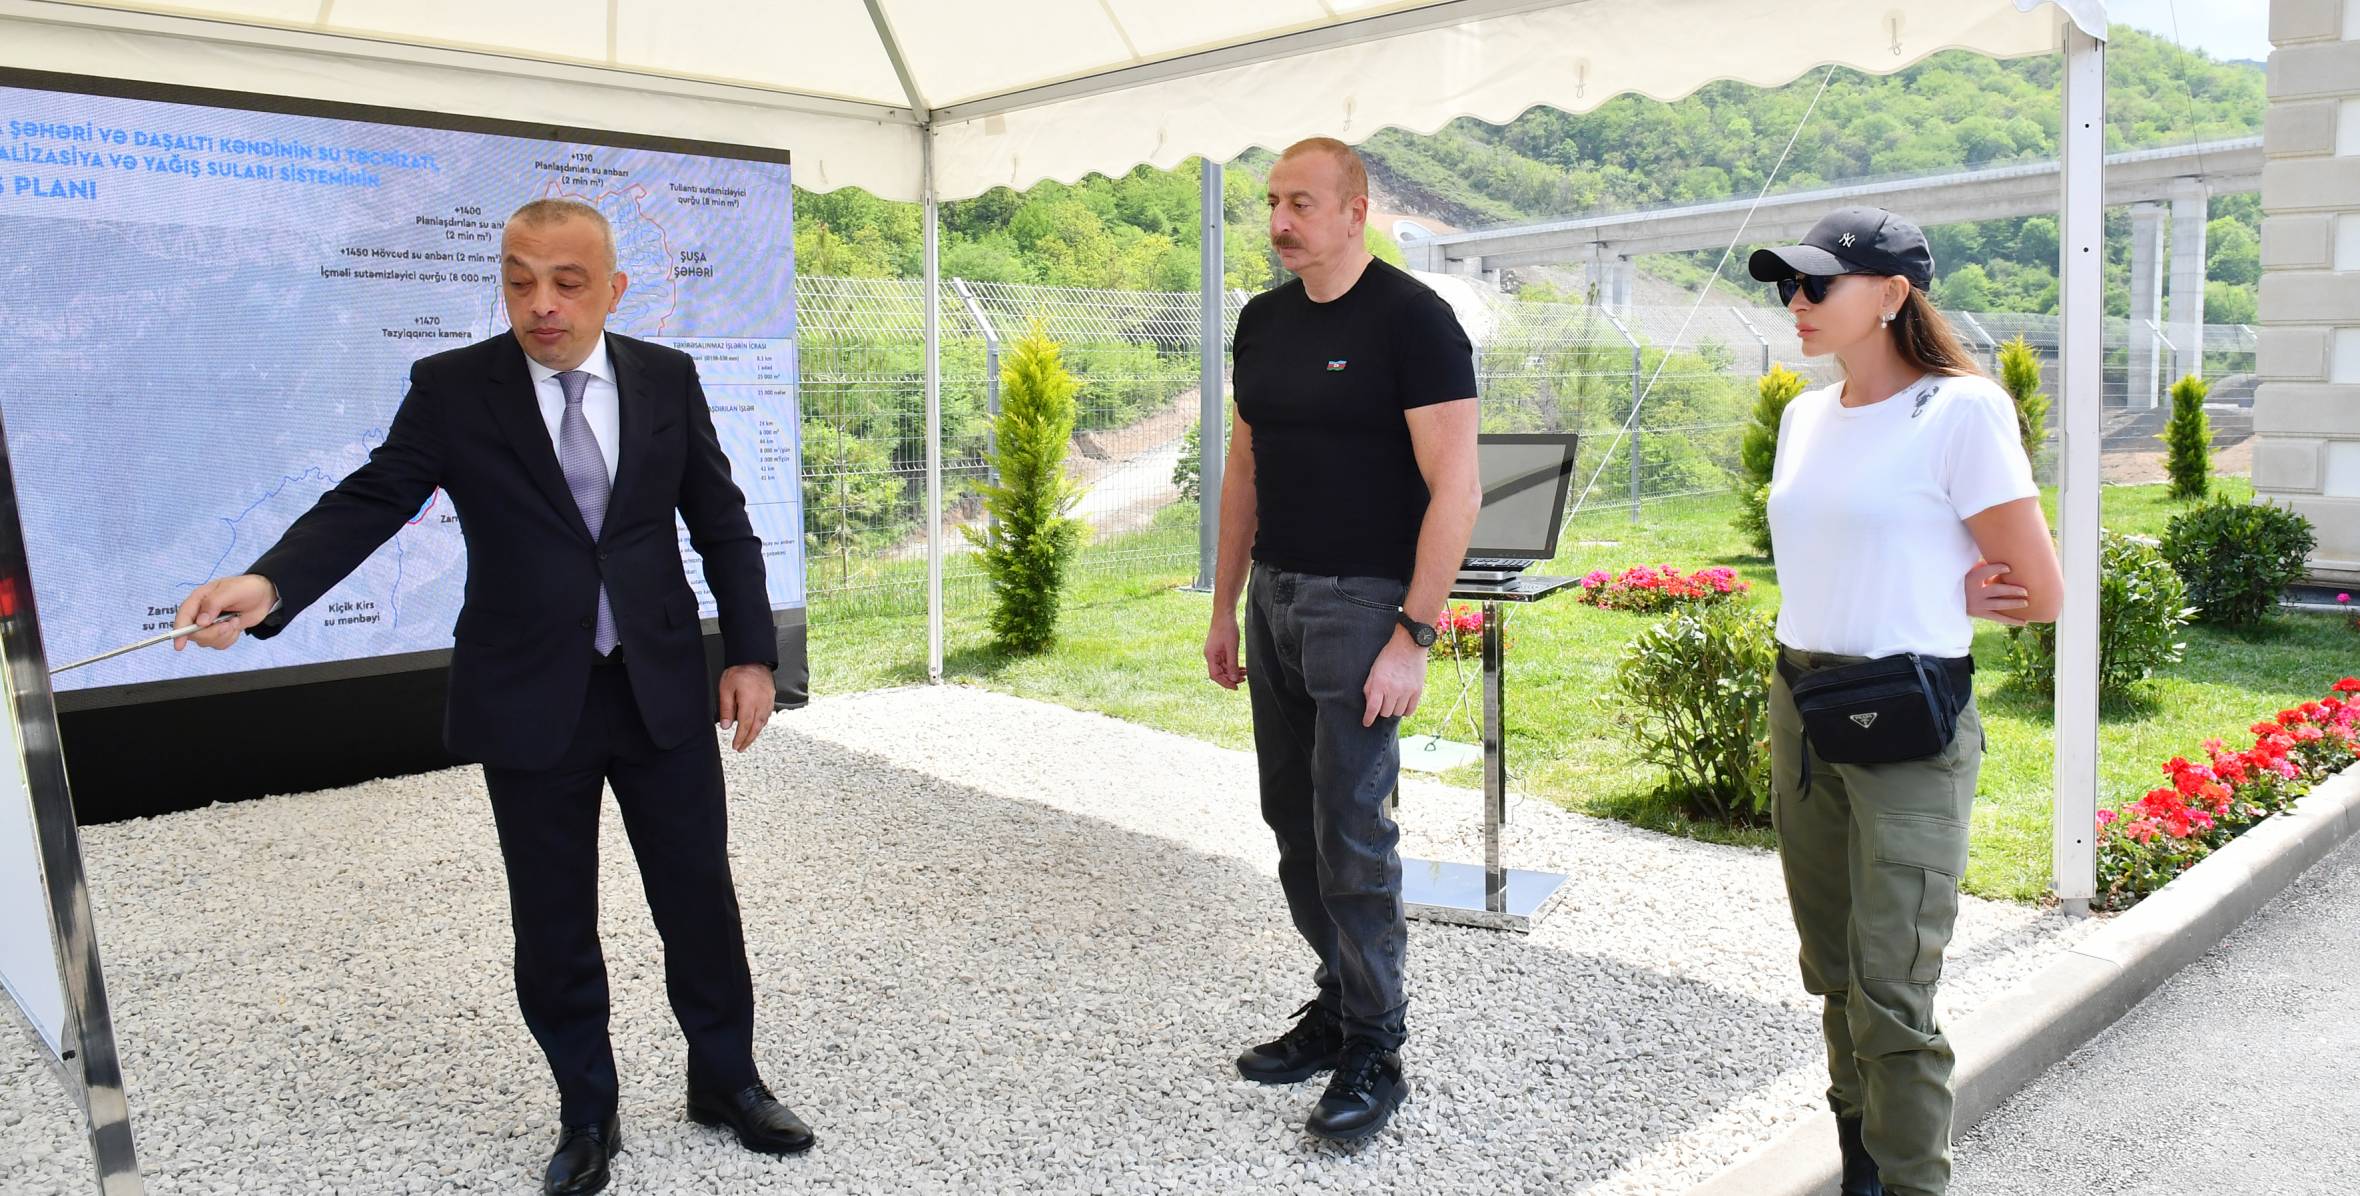 Ilham Aliyev and First Lady Mehriban Aliyeva inaugurated Zarislichay pumping station in village of Dashalti